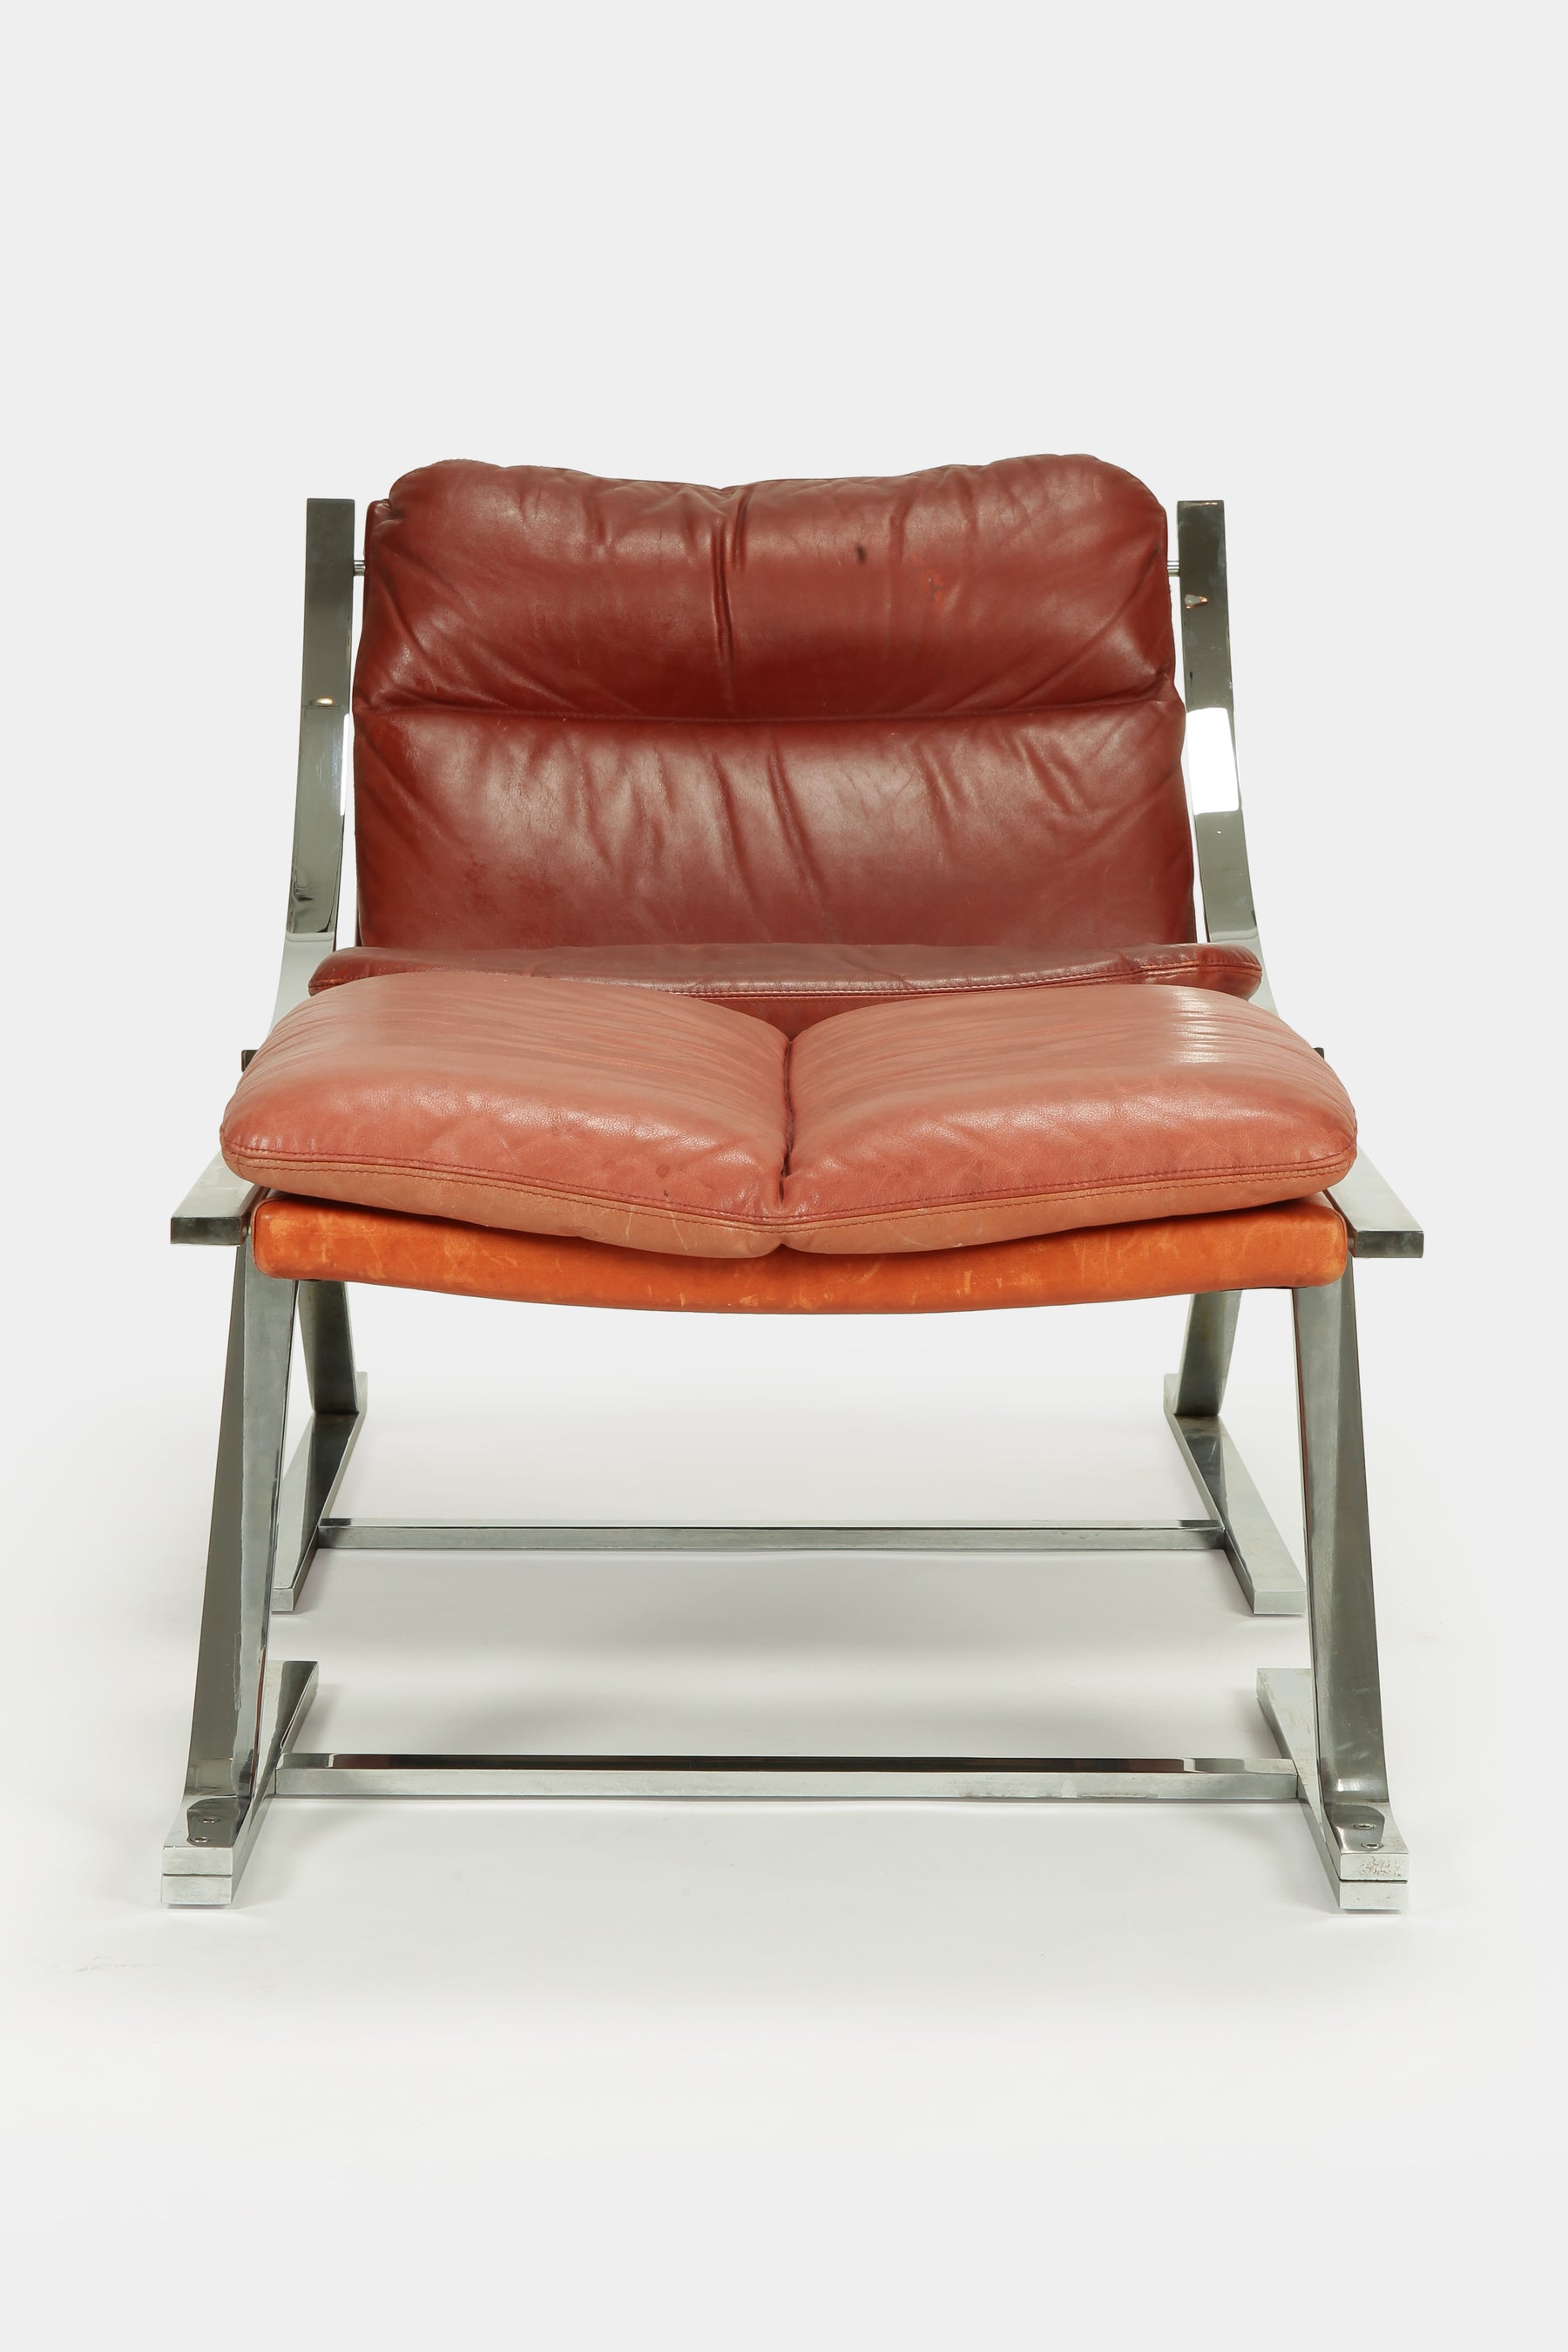 2x Paul Tuttle Zeta Chair with Ottoman Strässle, 70s